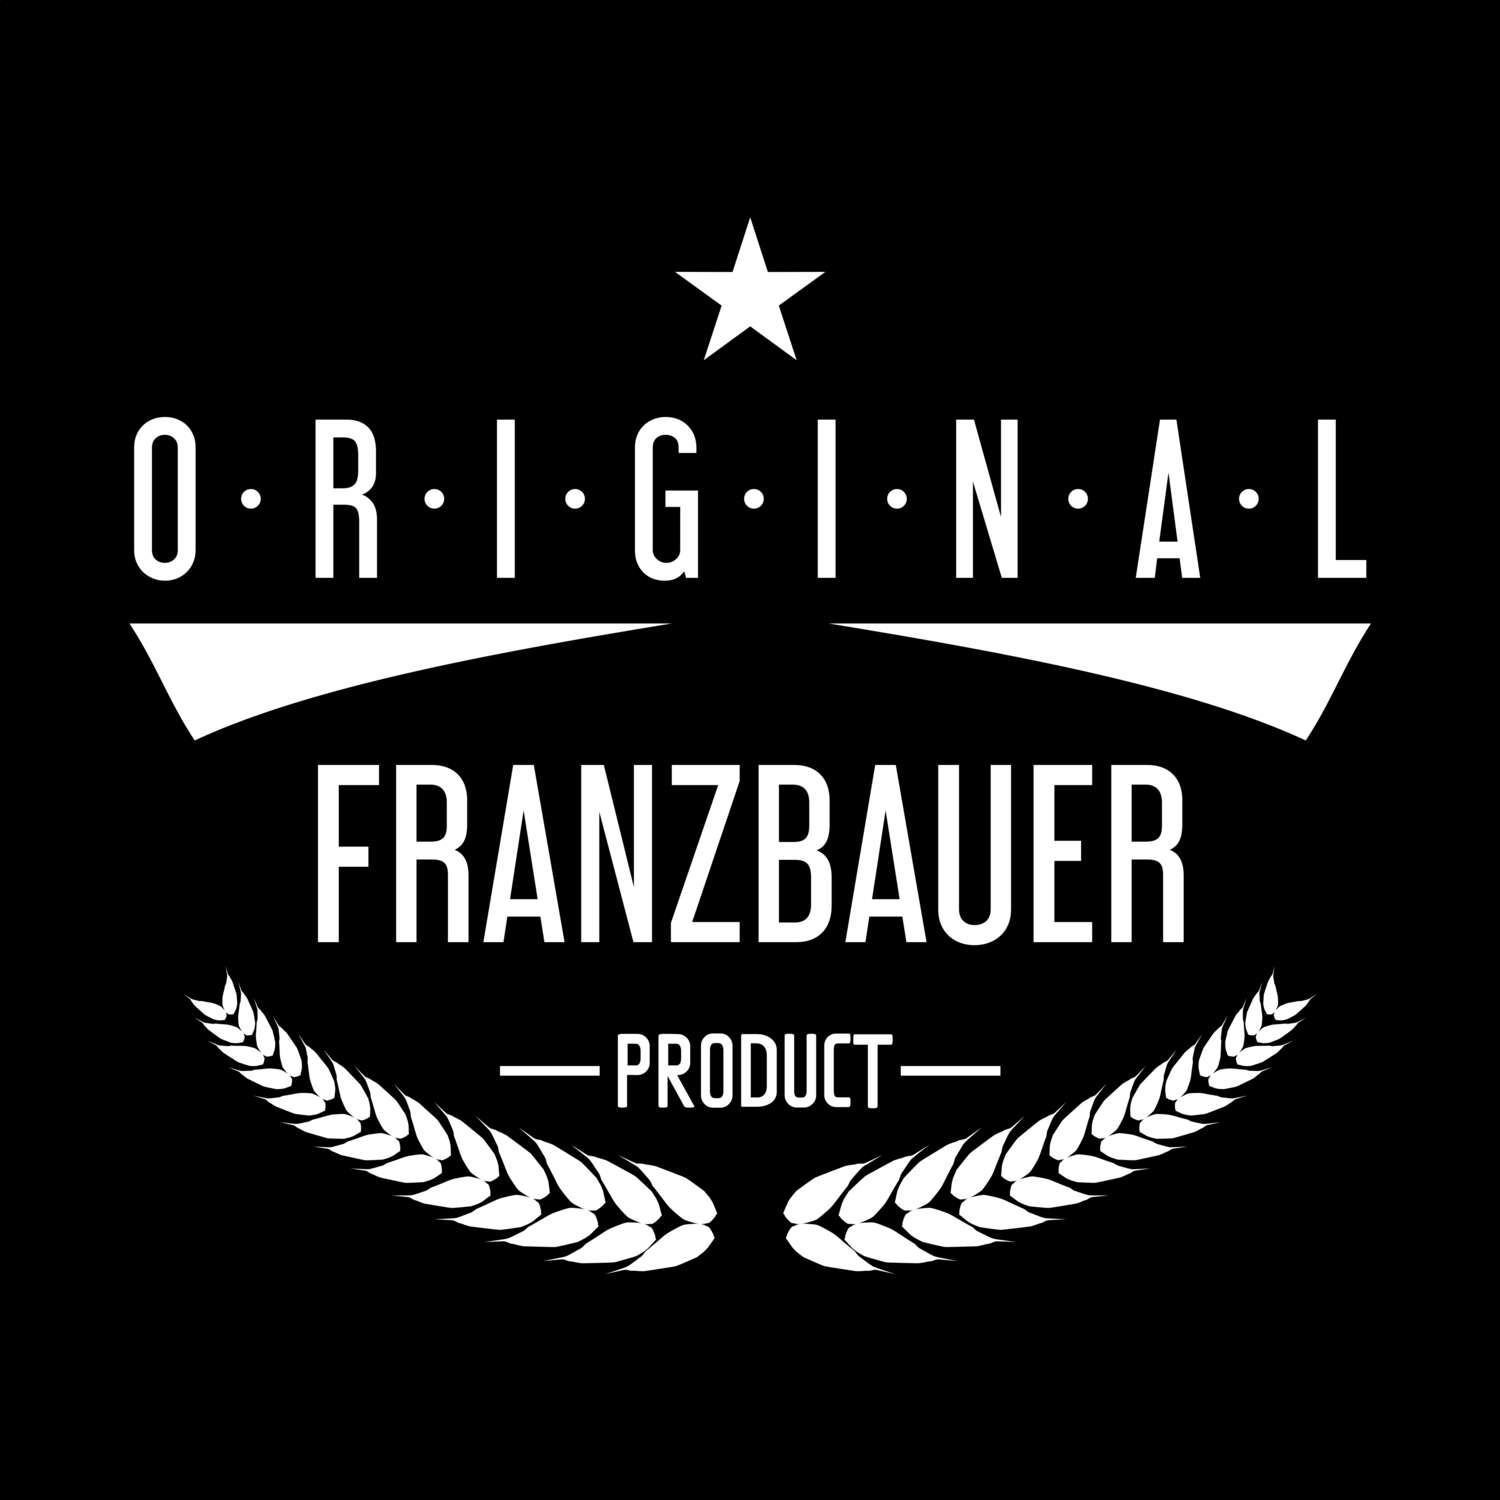 Franzbauer T-Shirt »Original Product«